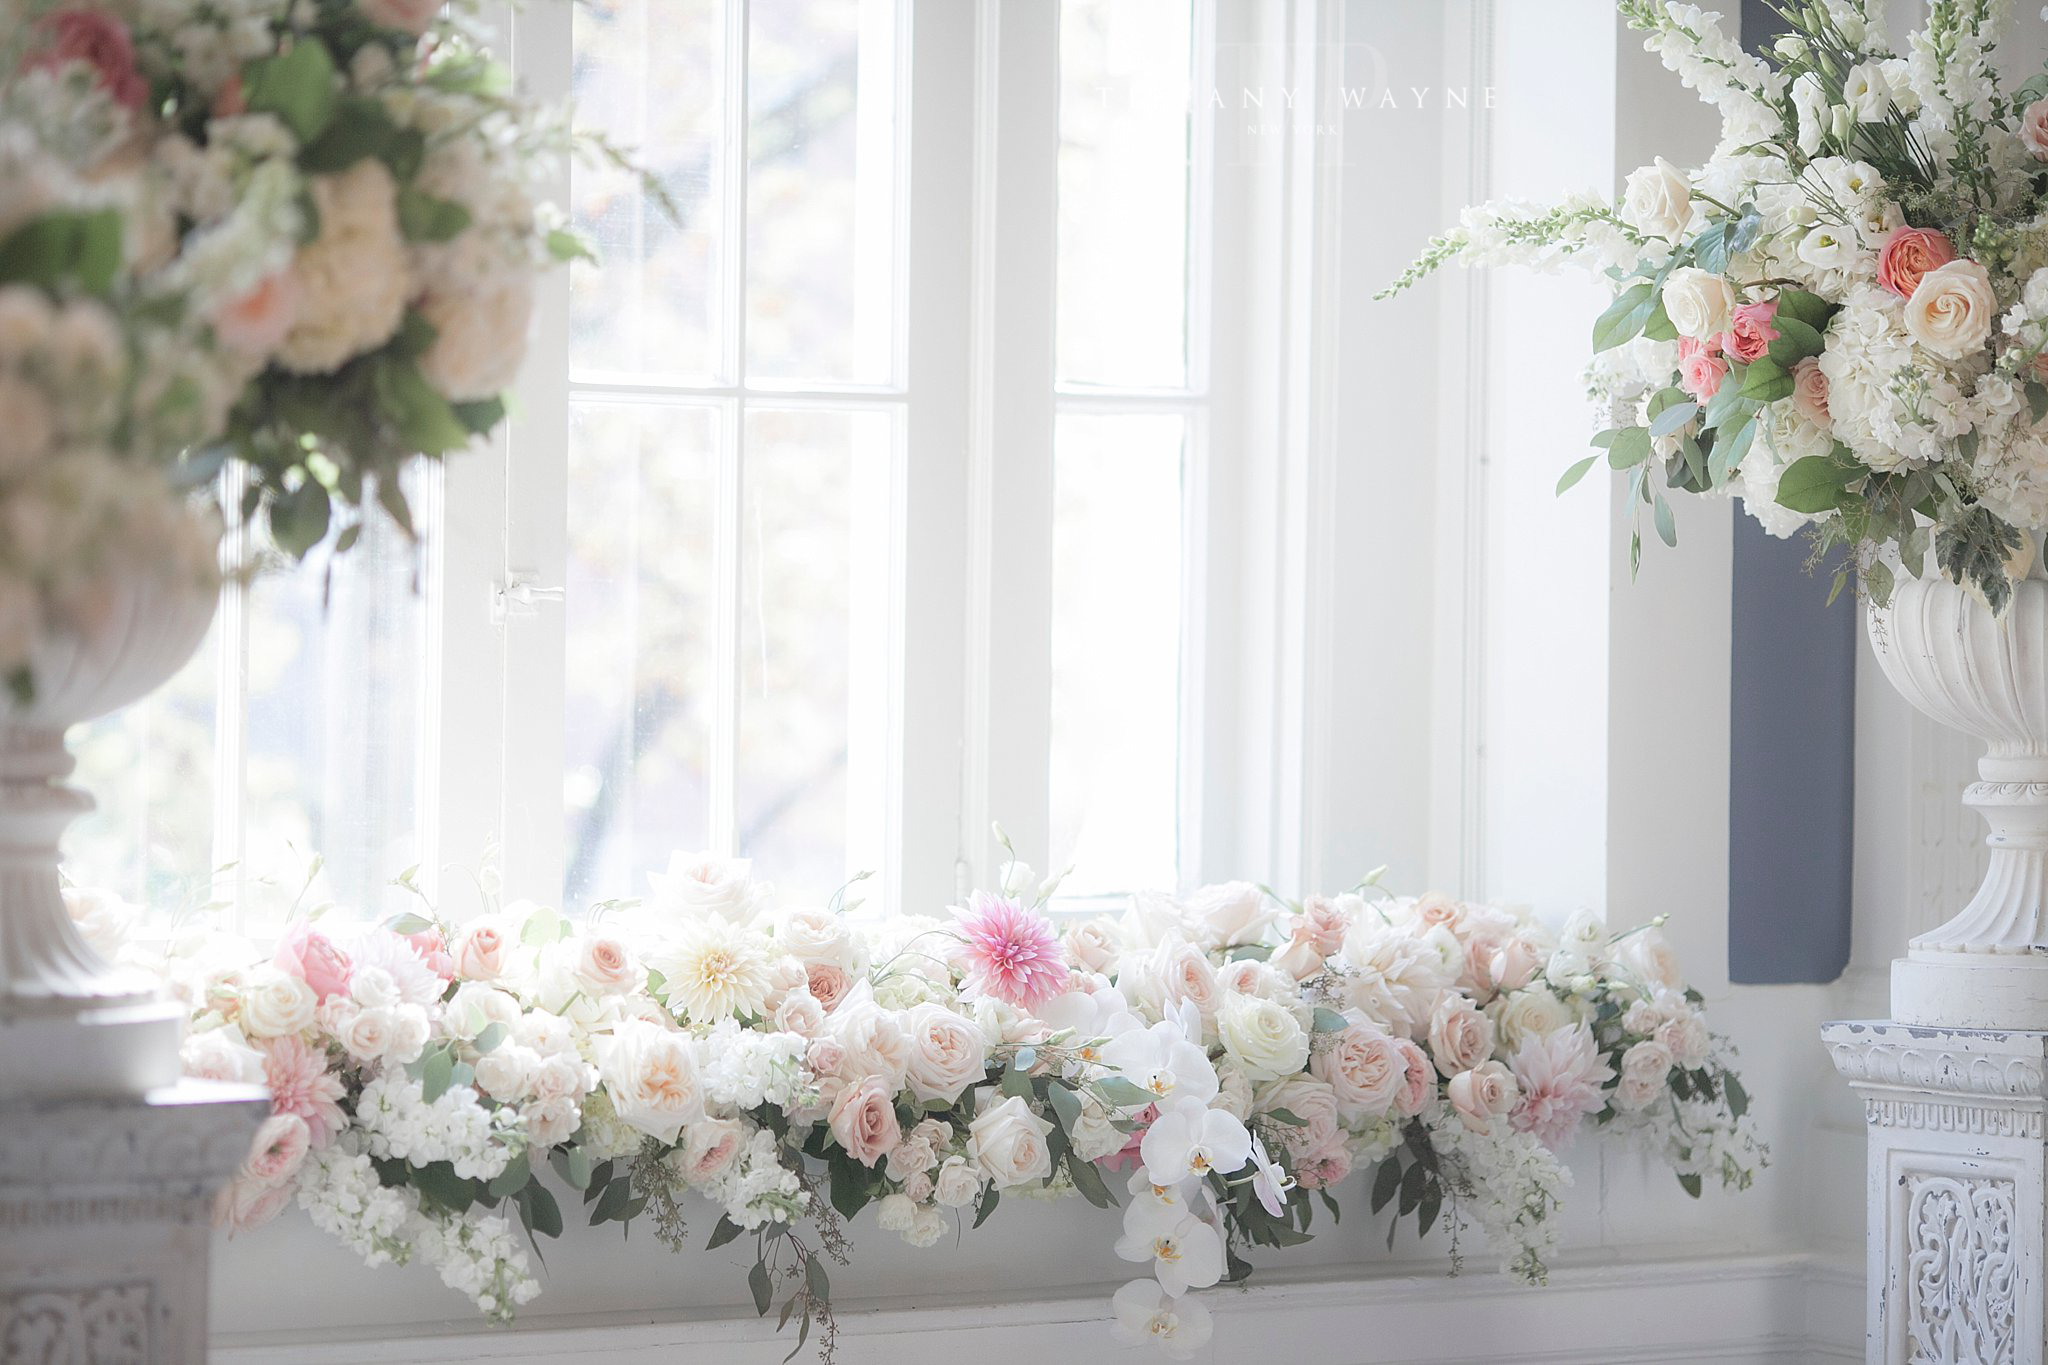 Tiffany Wayne Photography photographs Renaissance Floral Design arrangements for wedding ceremony